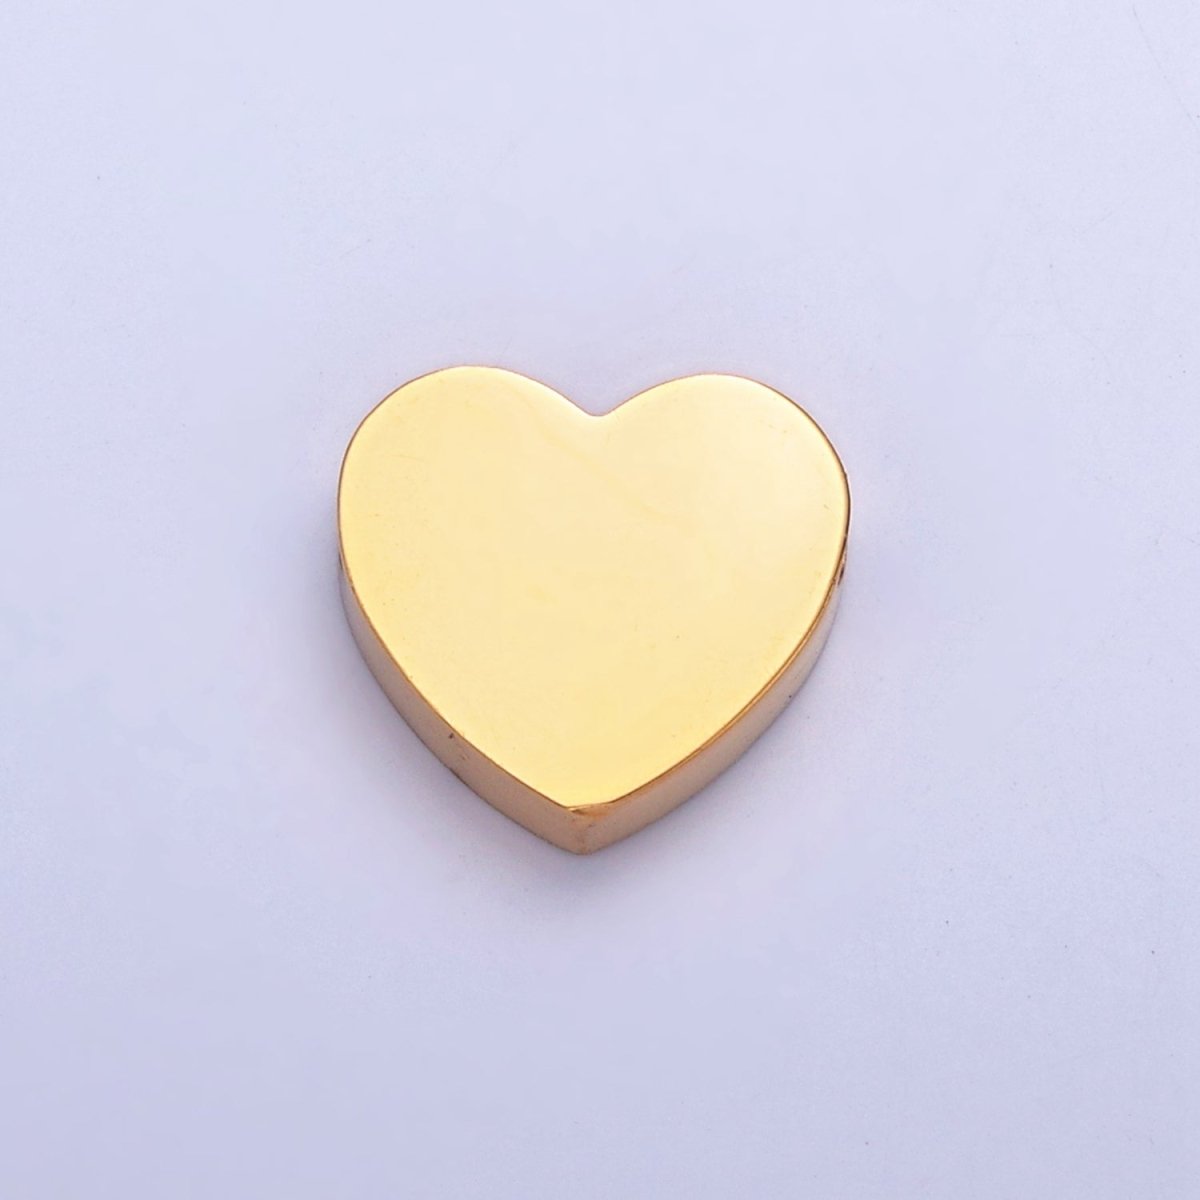 Dainty 9.7x10.6mm Stainless Steel Heart Bead, Jewelry Component For Jewelry Making, W-849 W-850 - DLUXCA